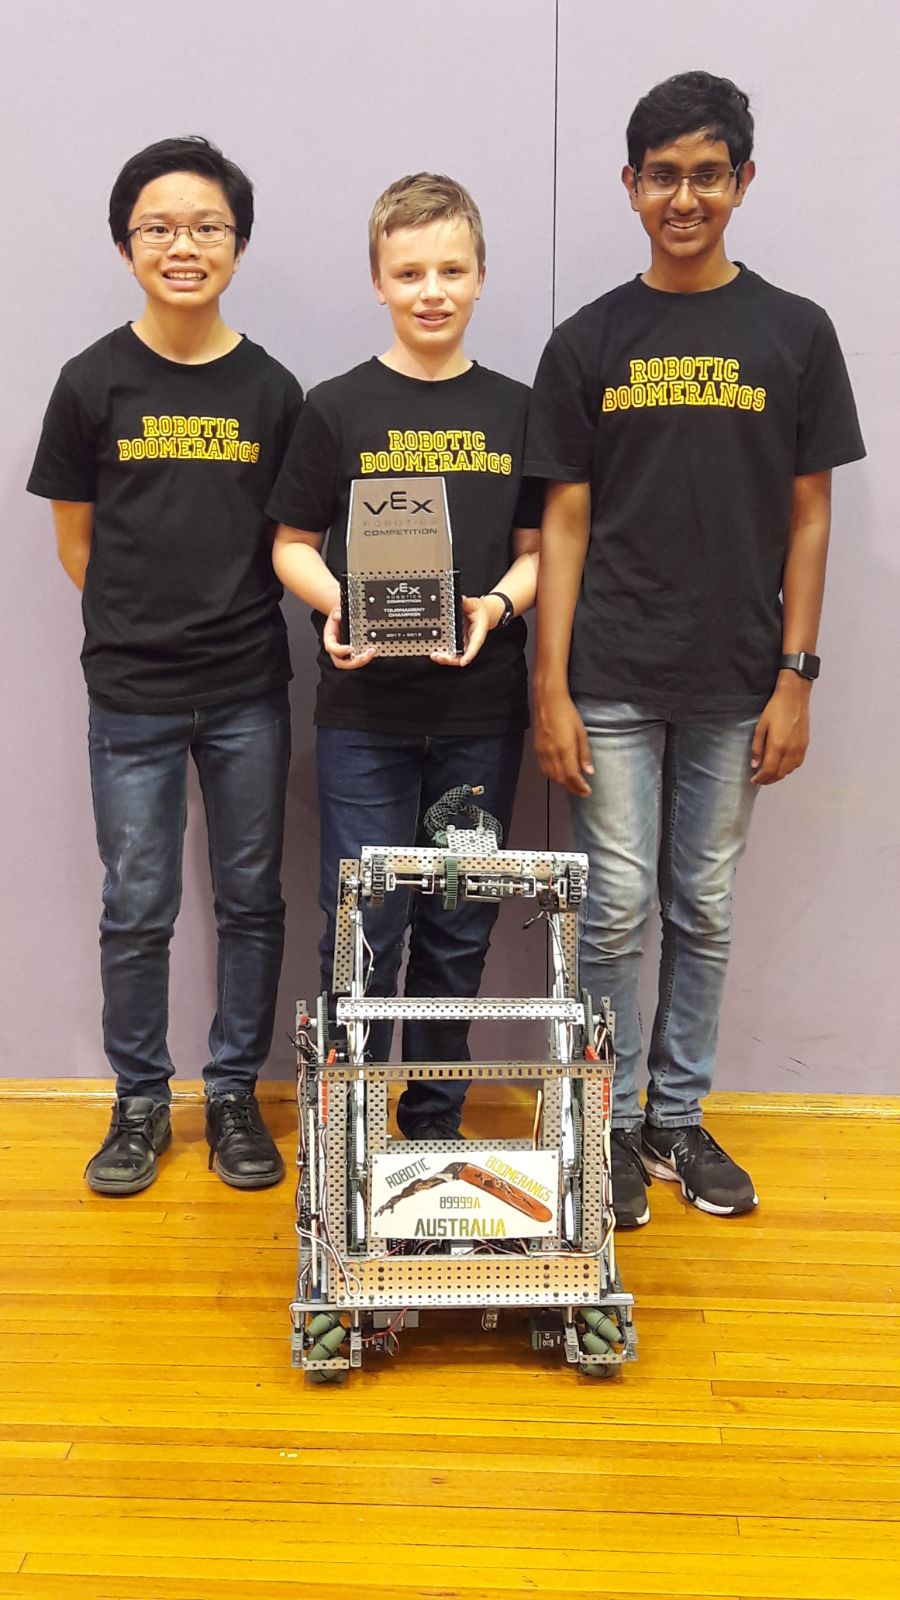 Team Robotic Boomerangs wins top award!